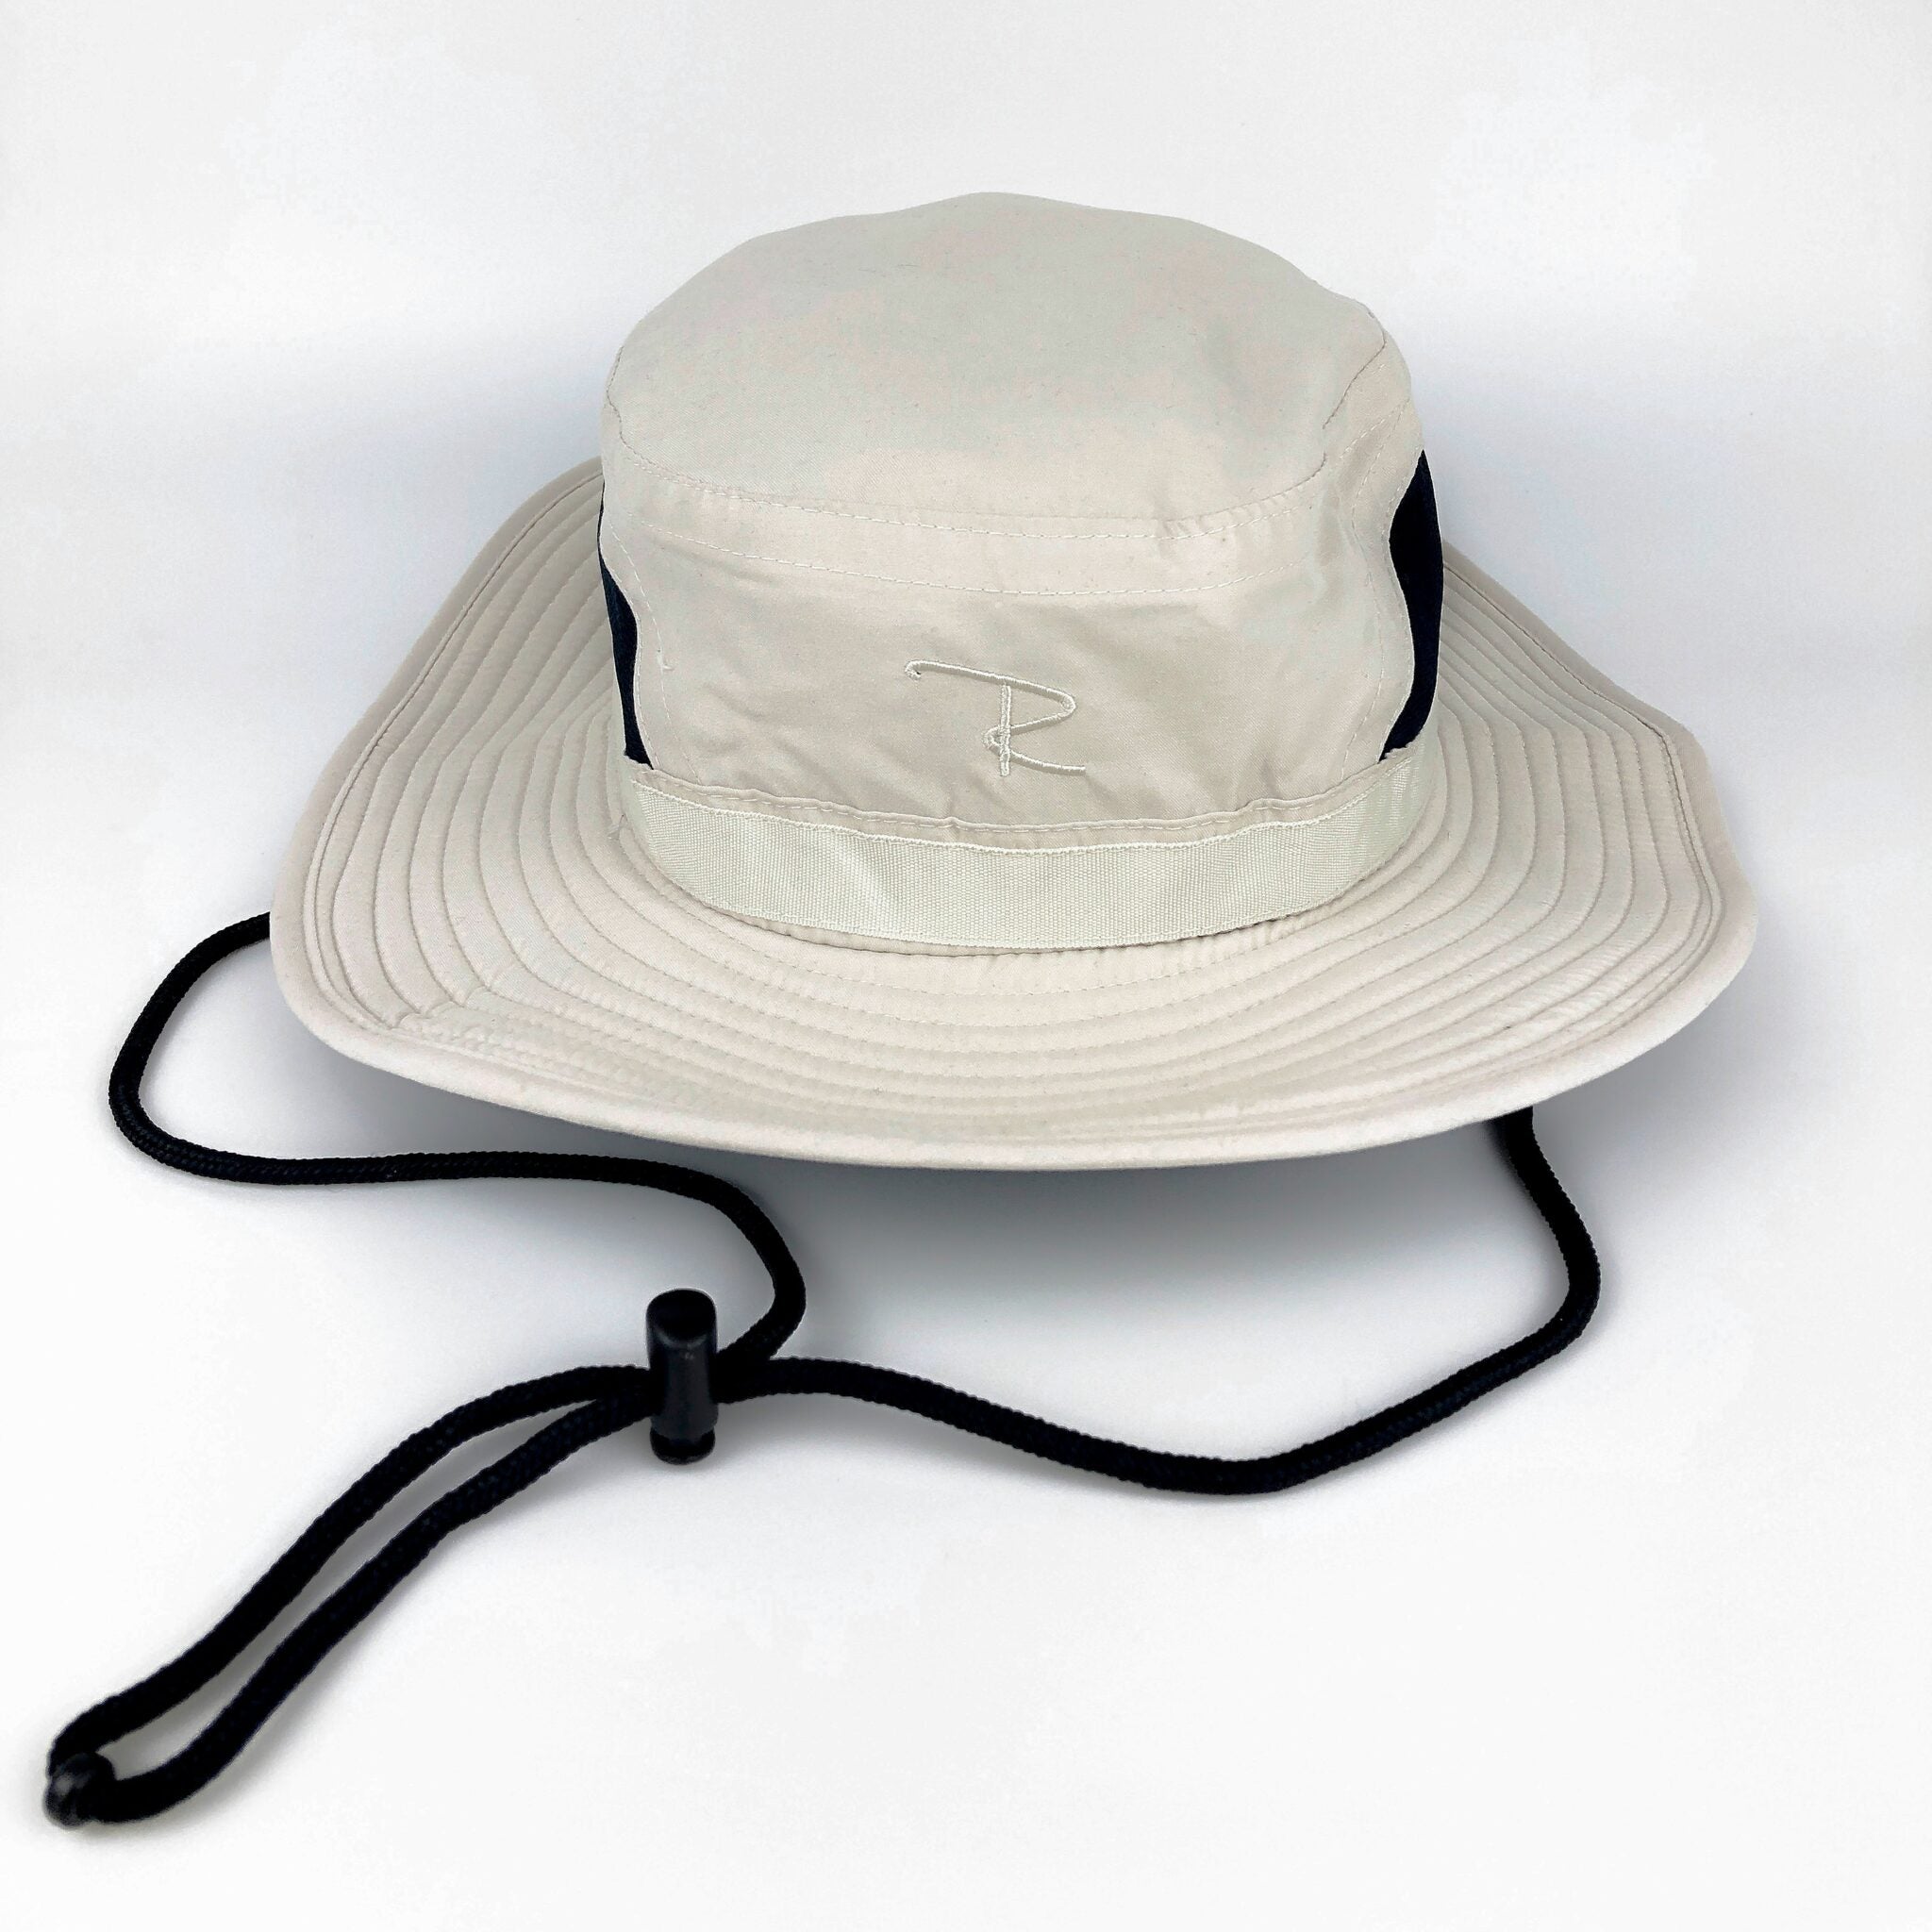 Radicool Childrens Broad Brim Hat - Large